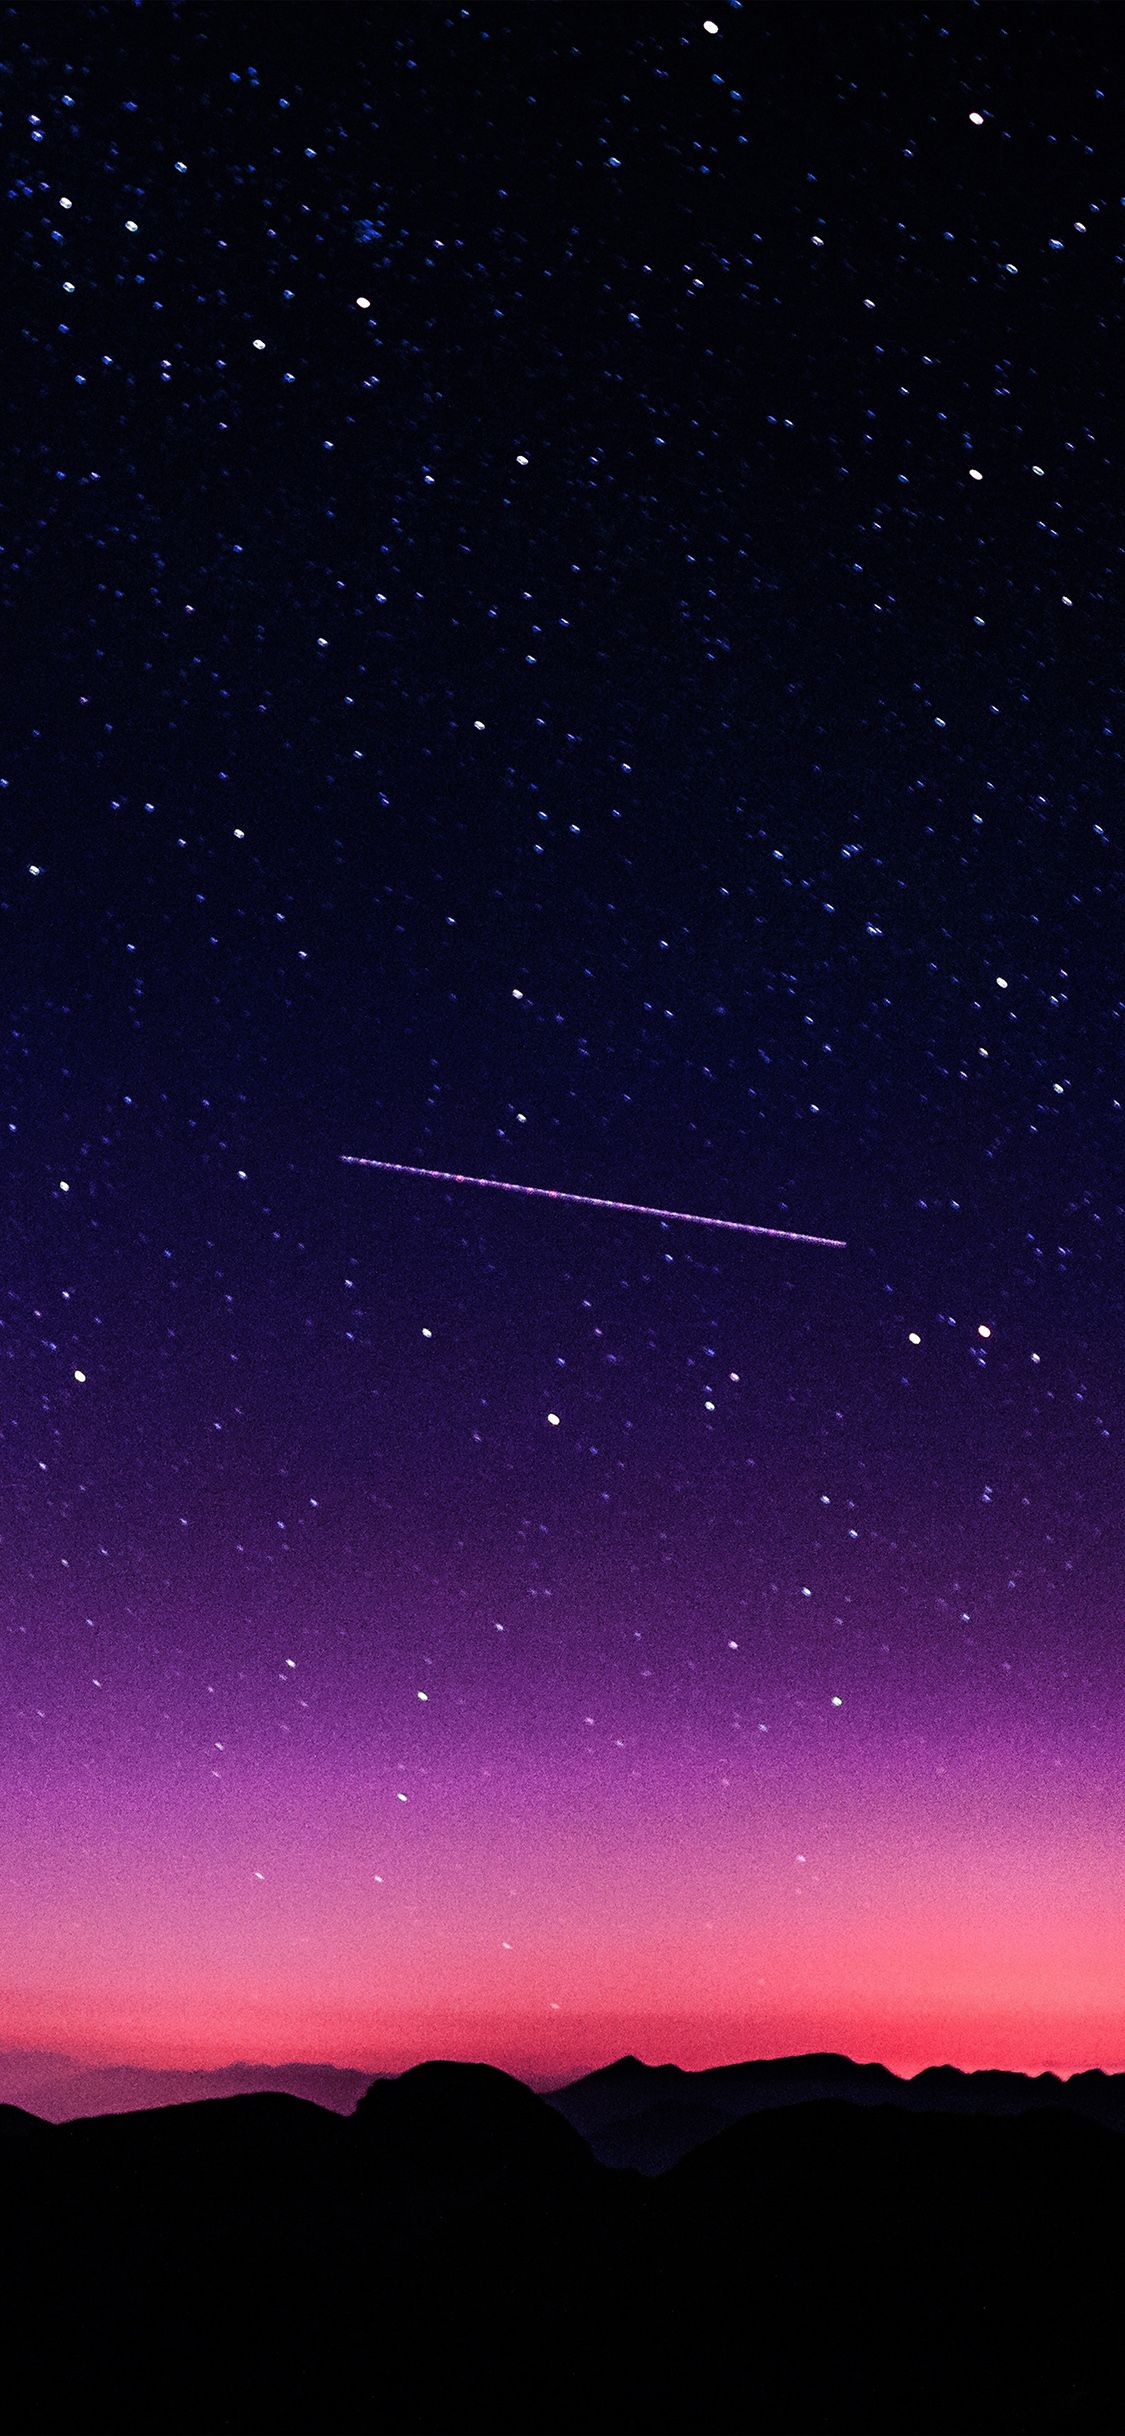 iPhone X wallpaper. star galaxy night sky mountain purple pink nature space